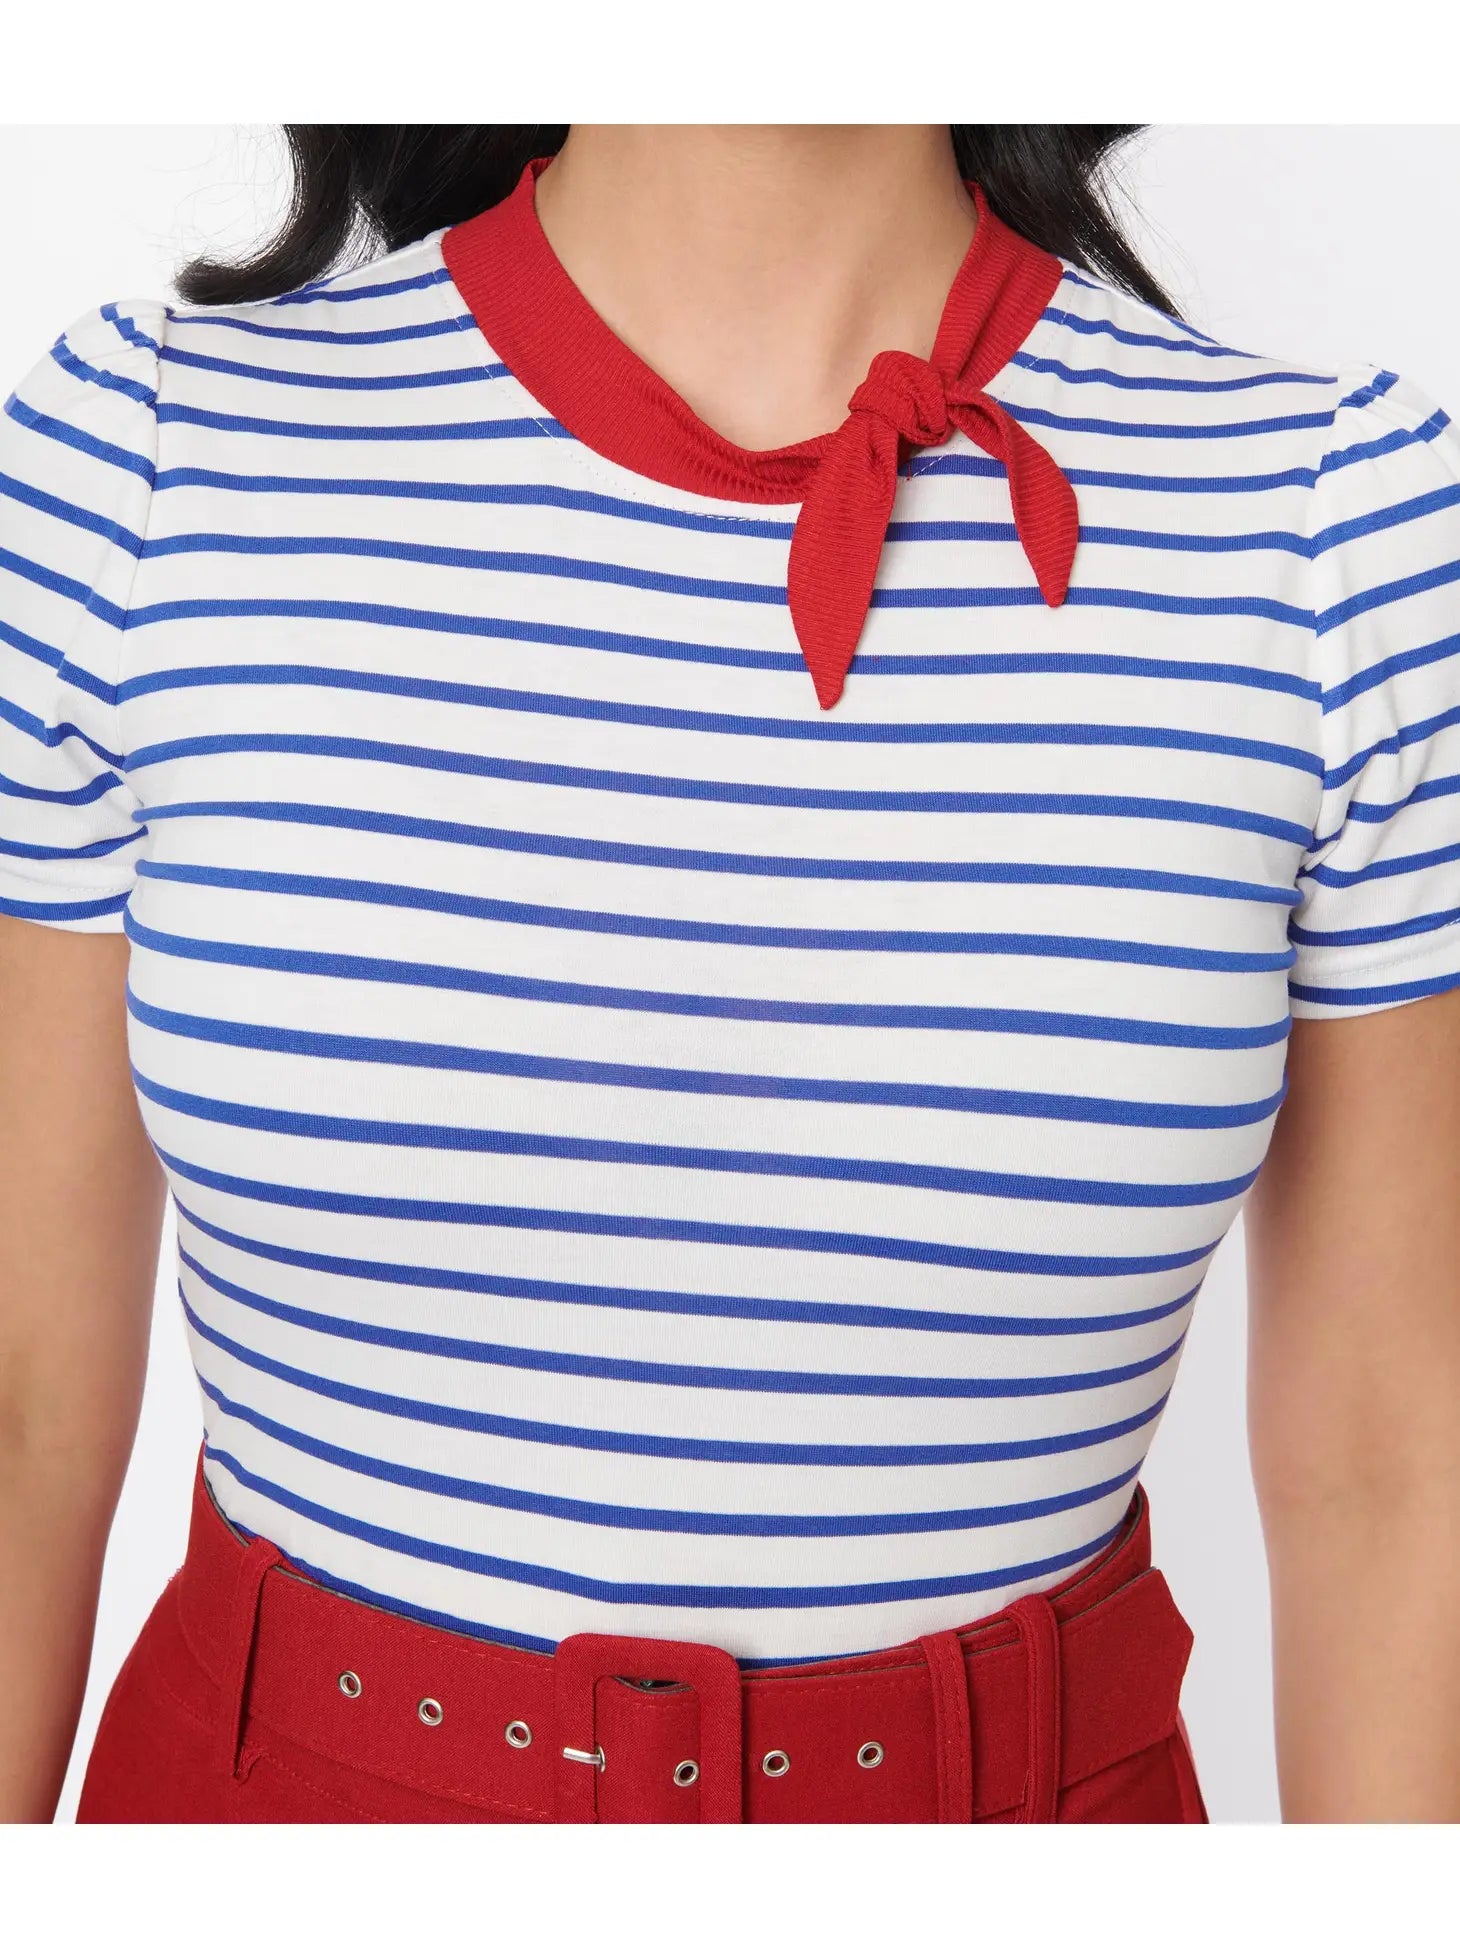 Vintage Sweetie Top - striped navy&white